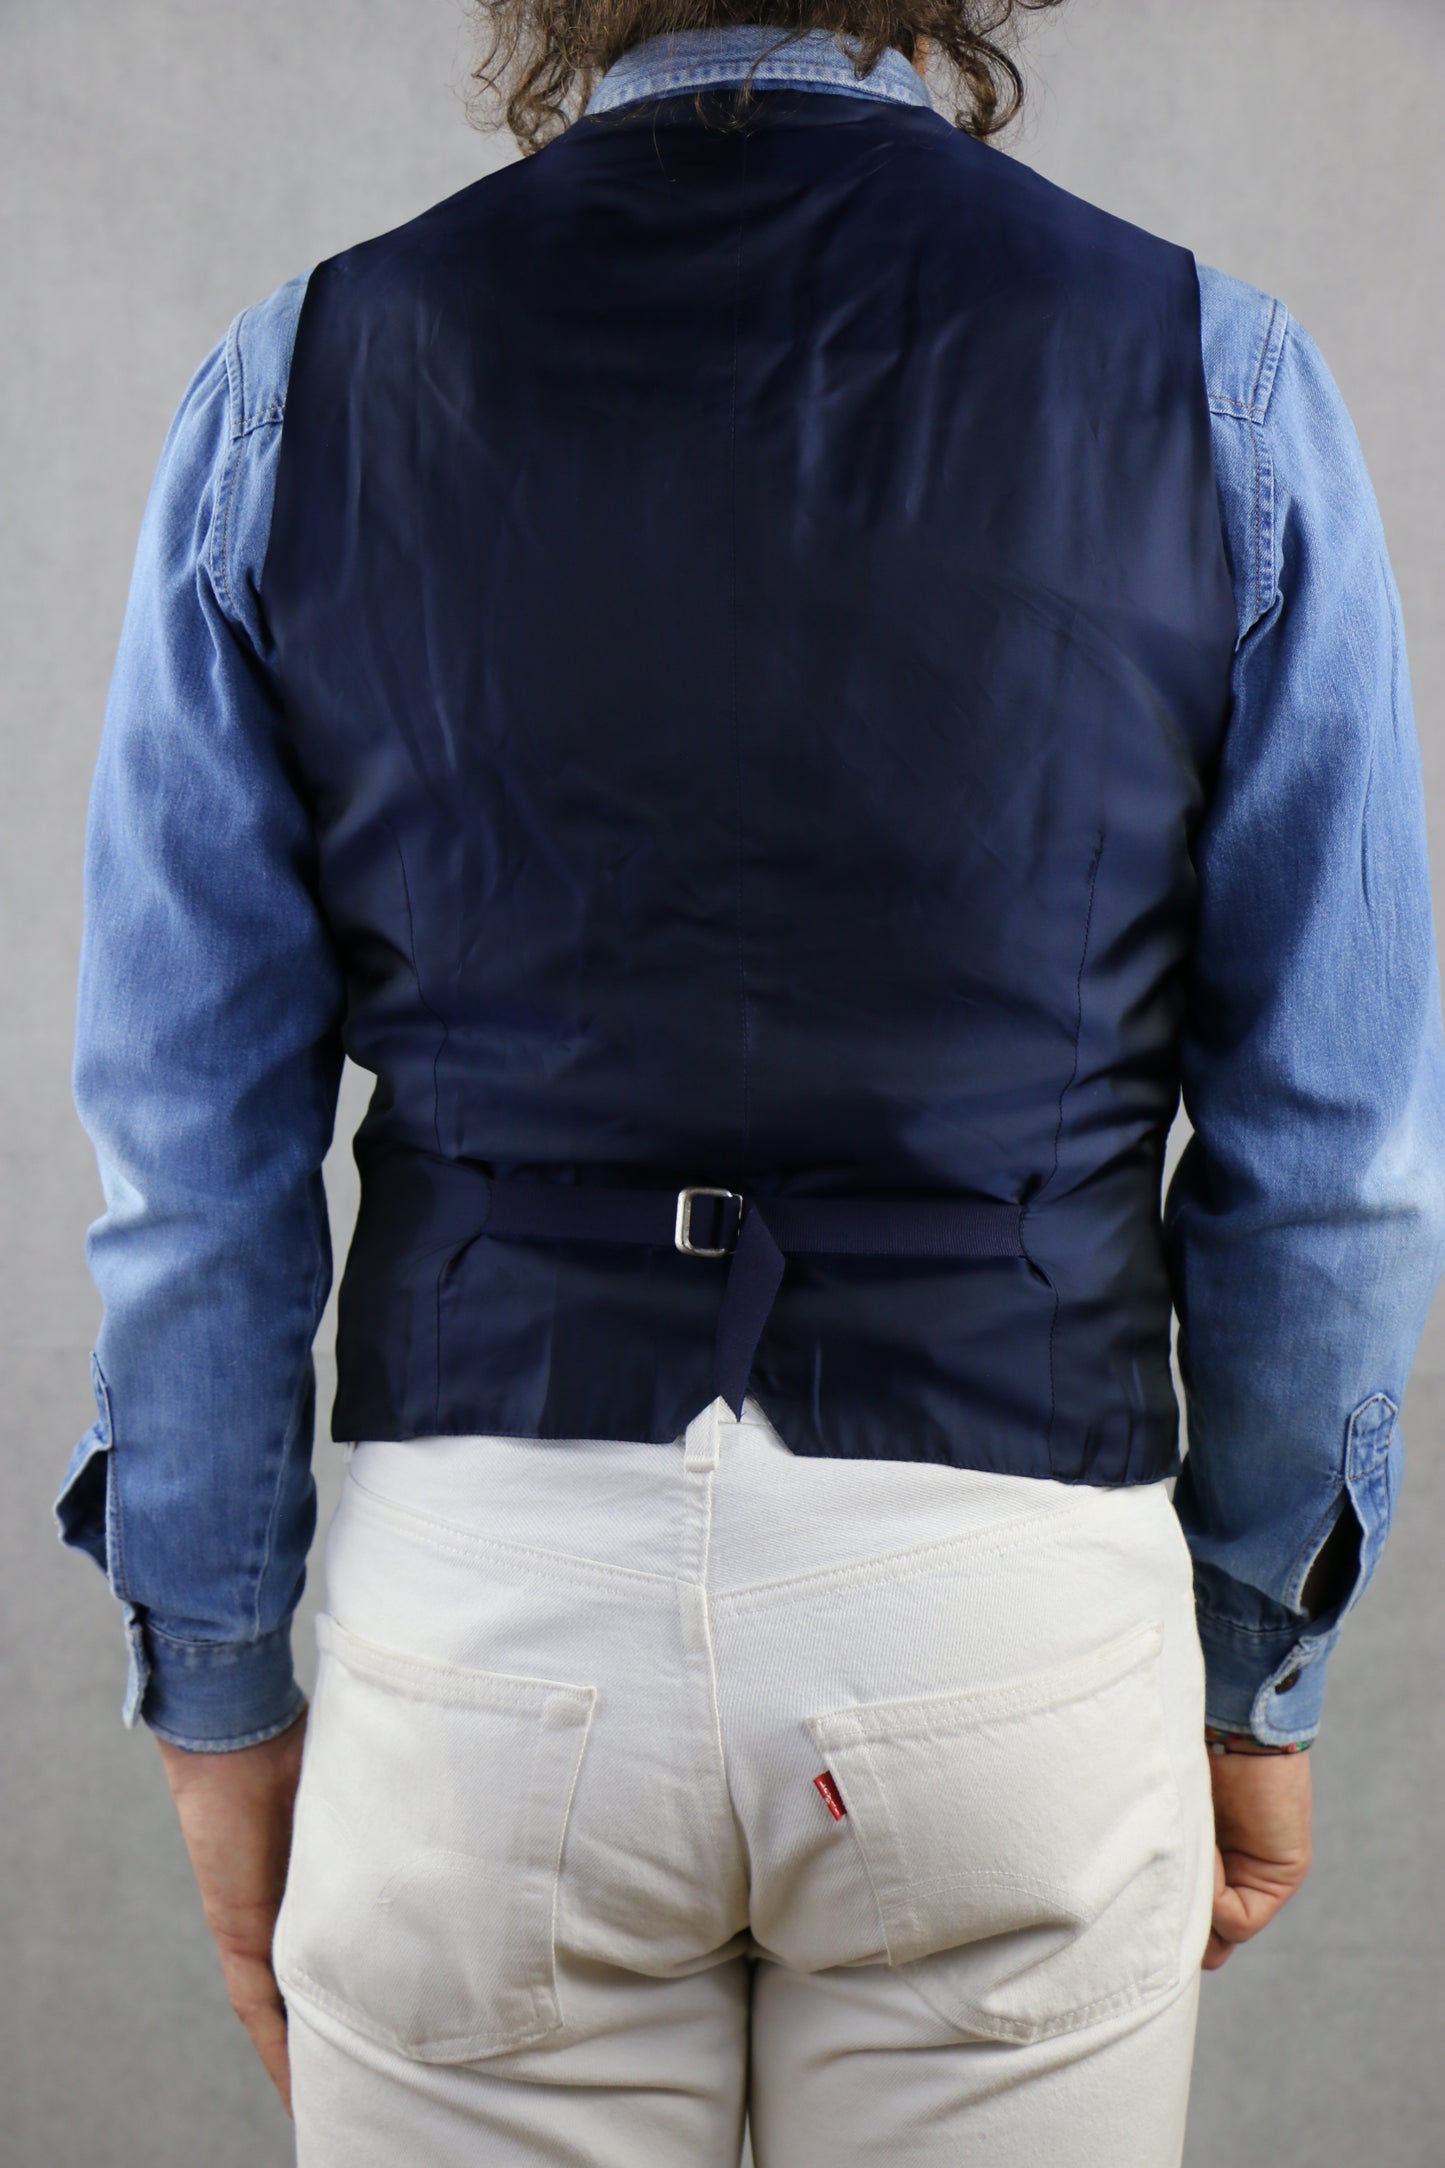 Tagliatore Suit Jacket w/ Vest, clochard92.com